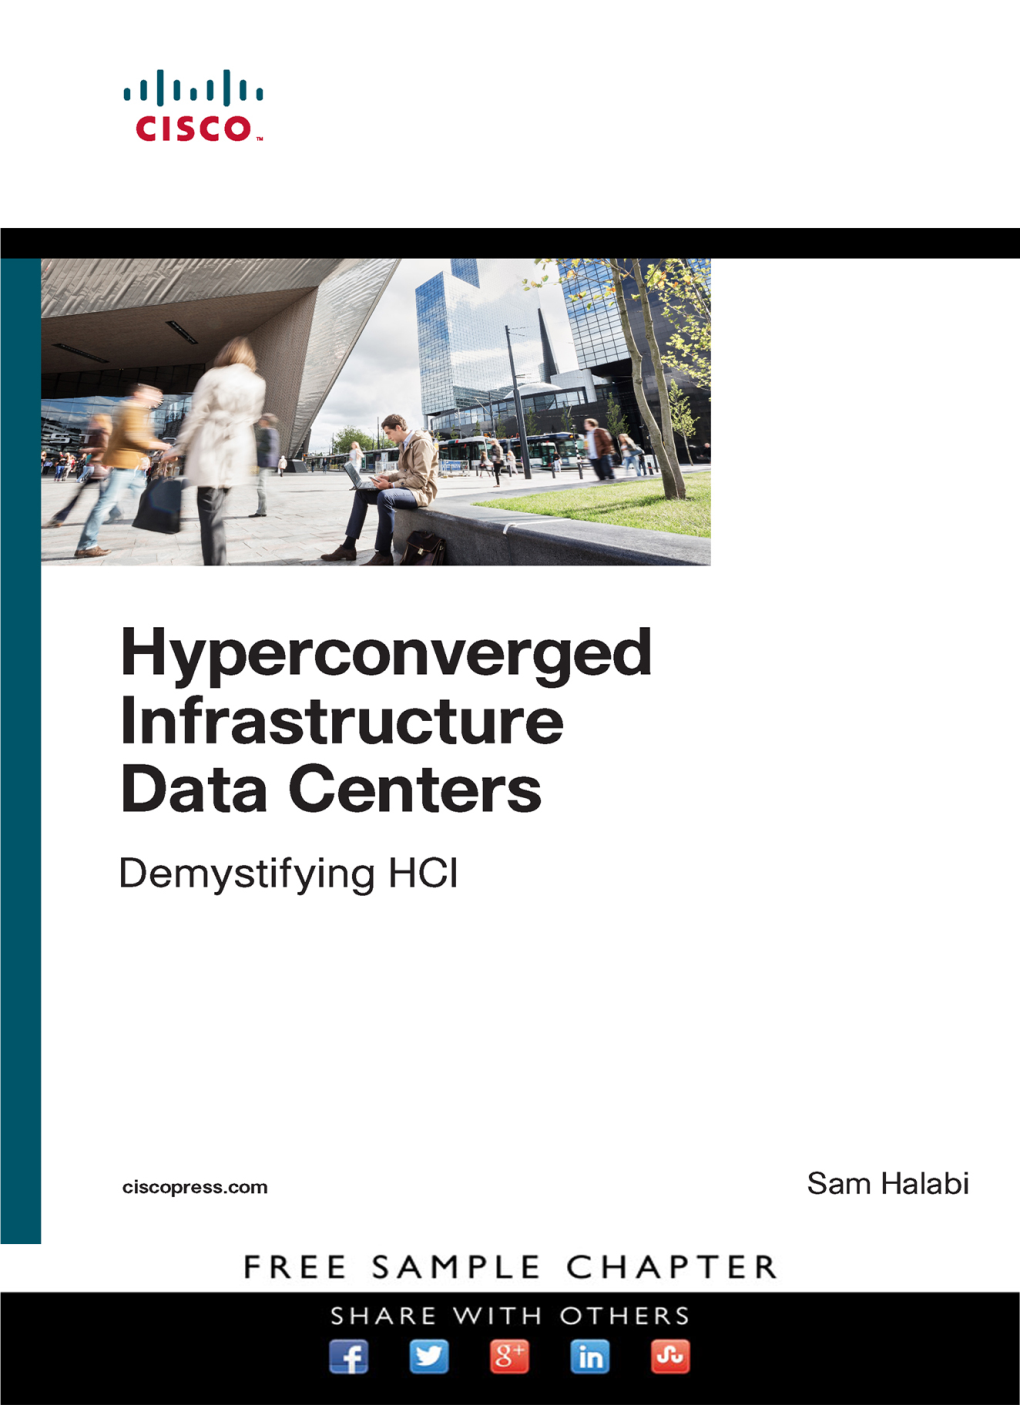 Hyperconverged Infrastructure Data Centers: Demystifying